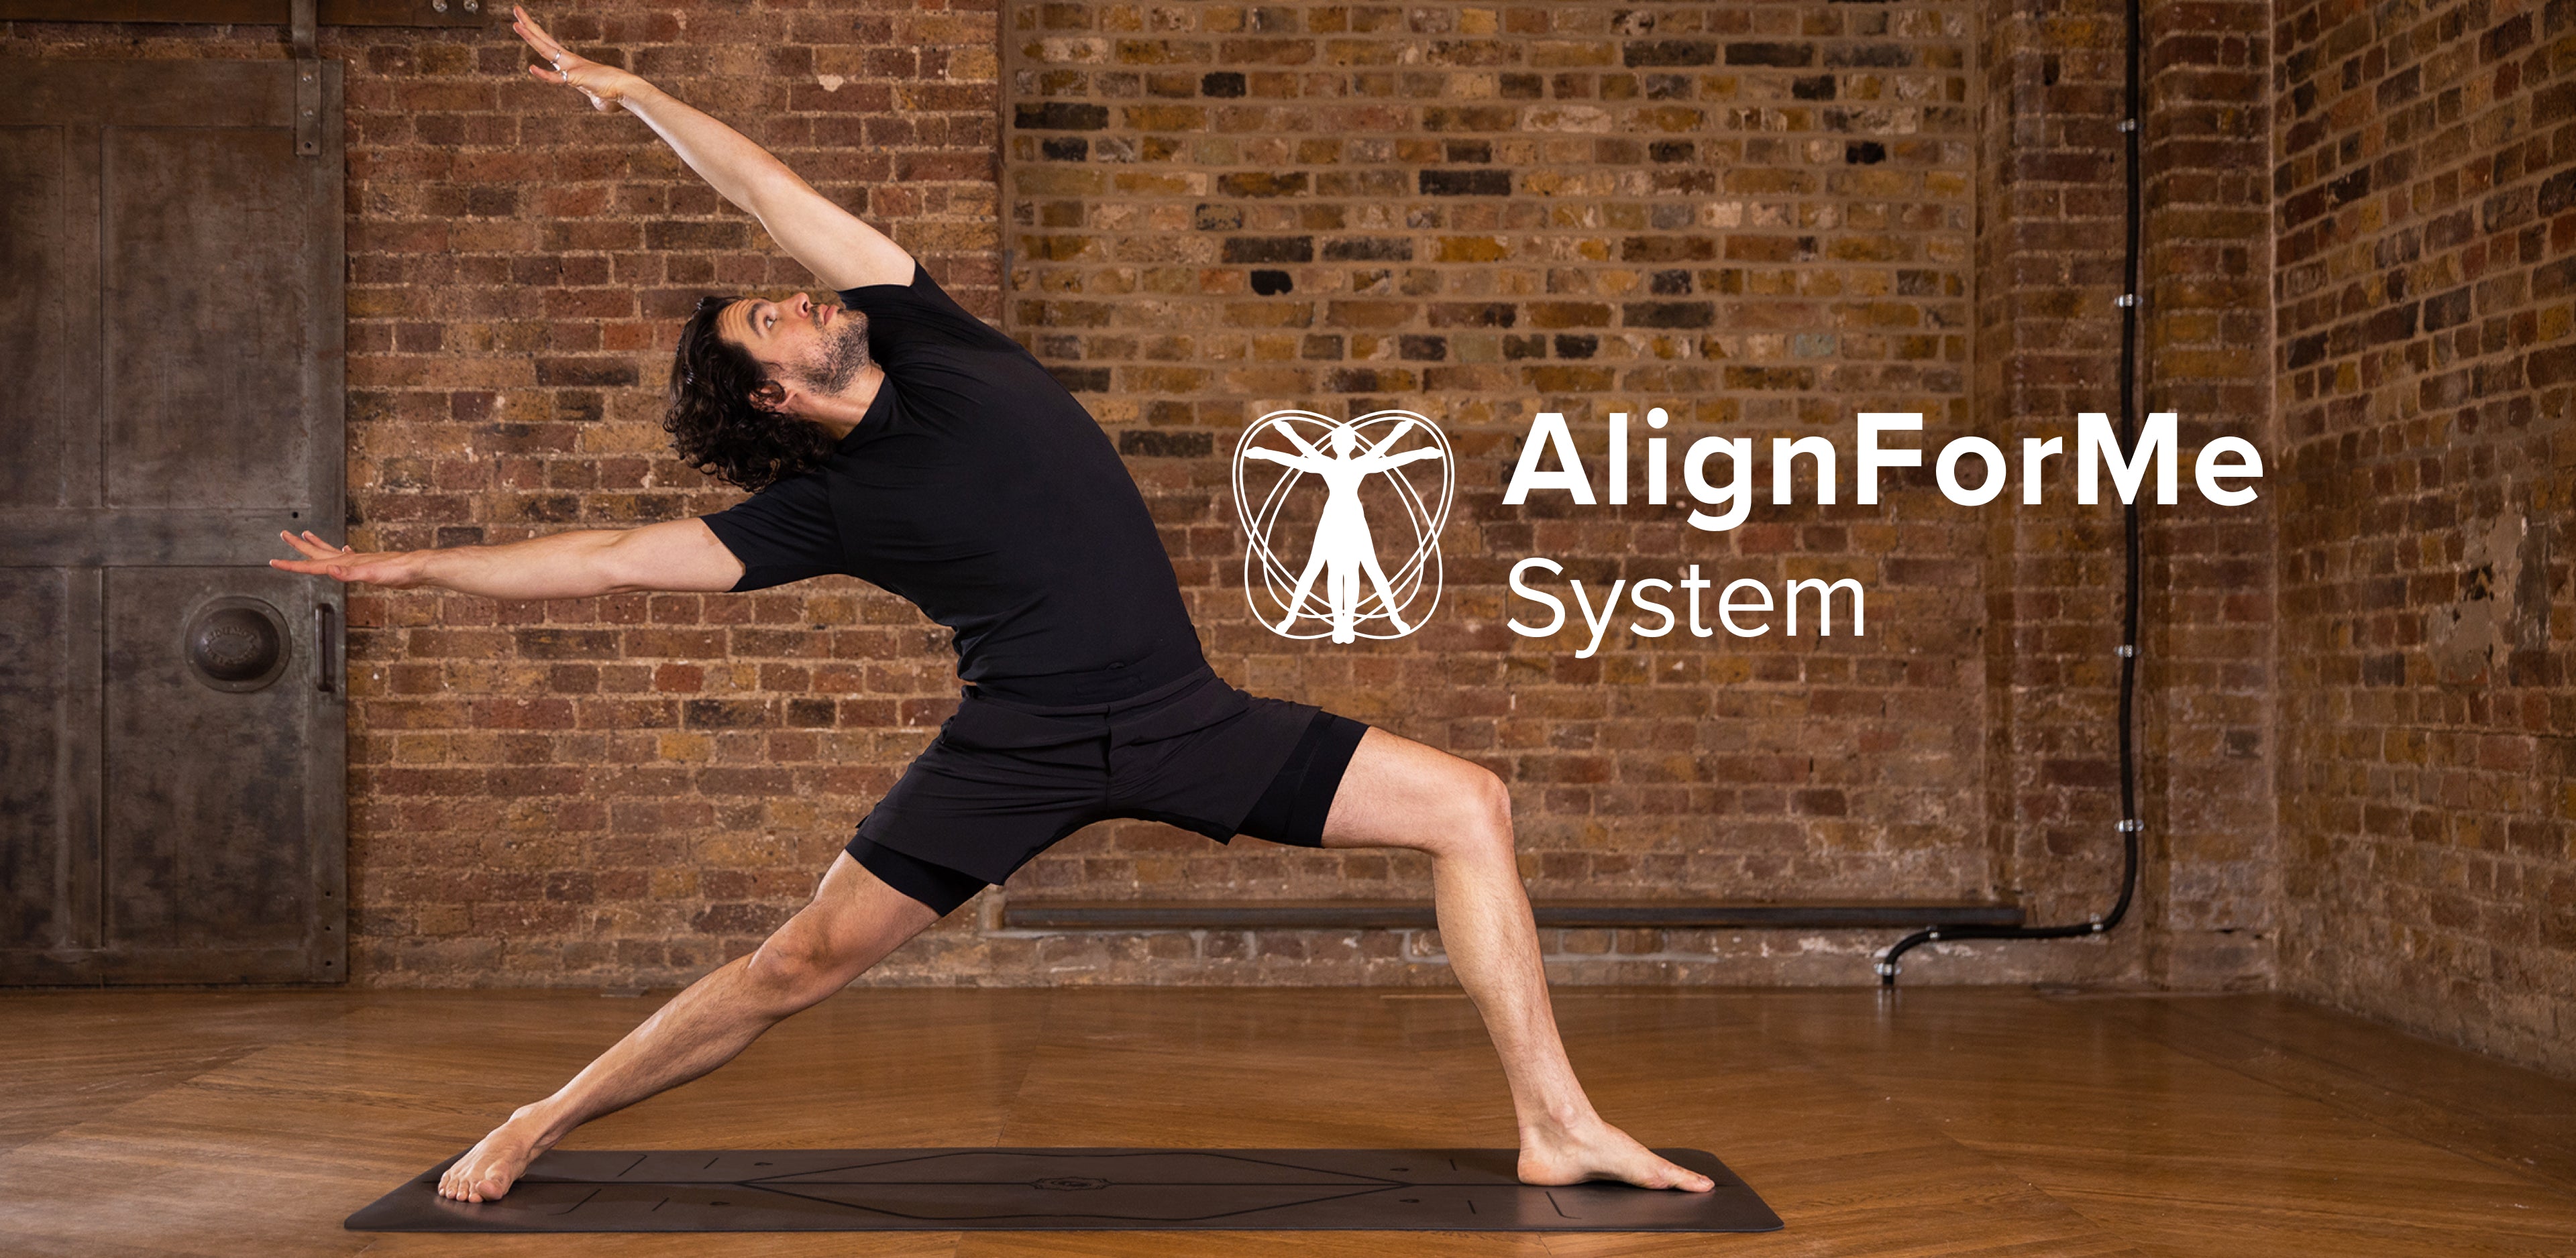 Liforme Yoga Mat Review — Yoga Alignment Guide